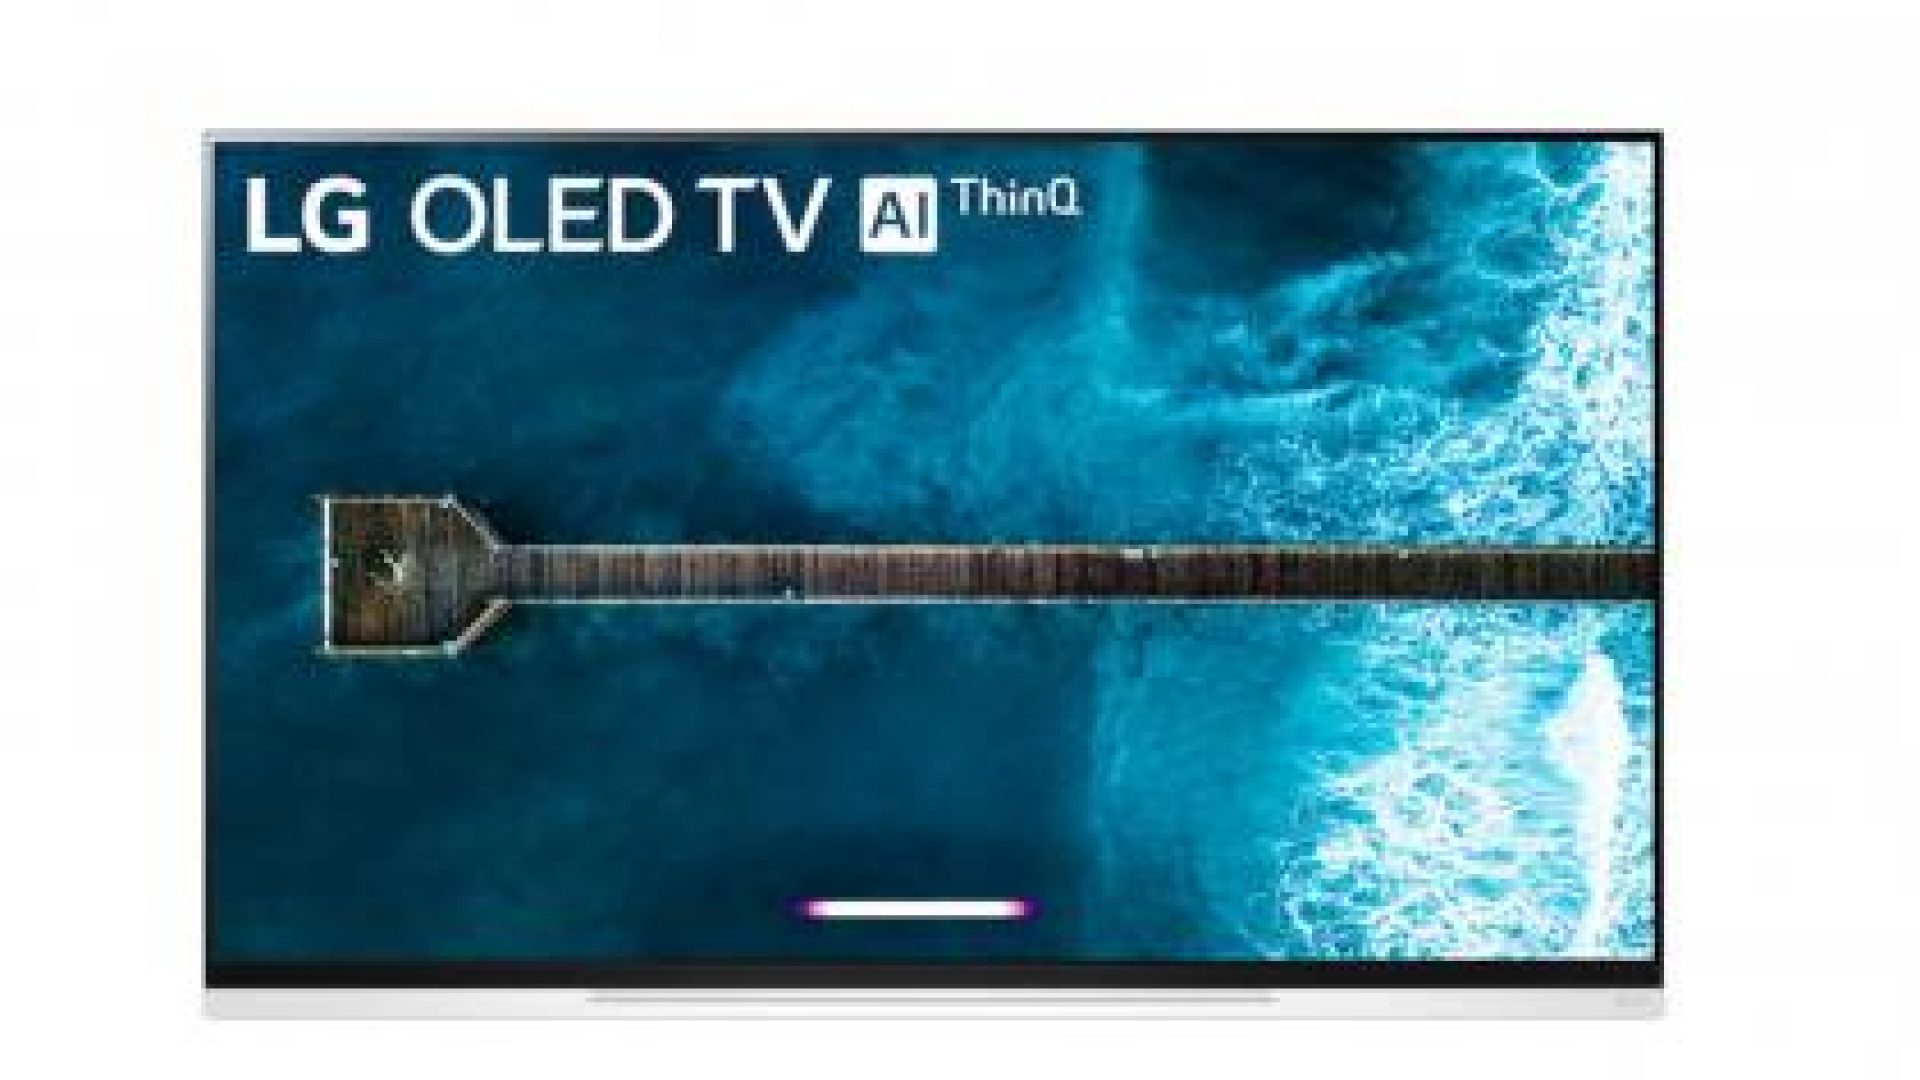 LG comienza a comercializar sus televisores OLED E9